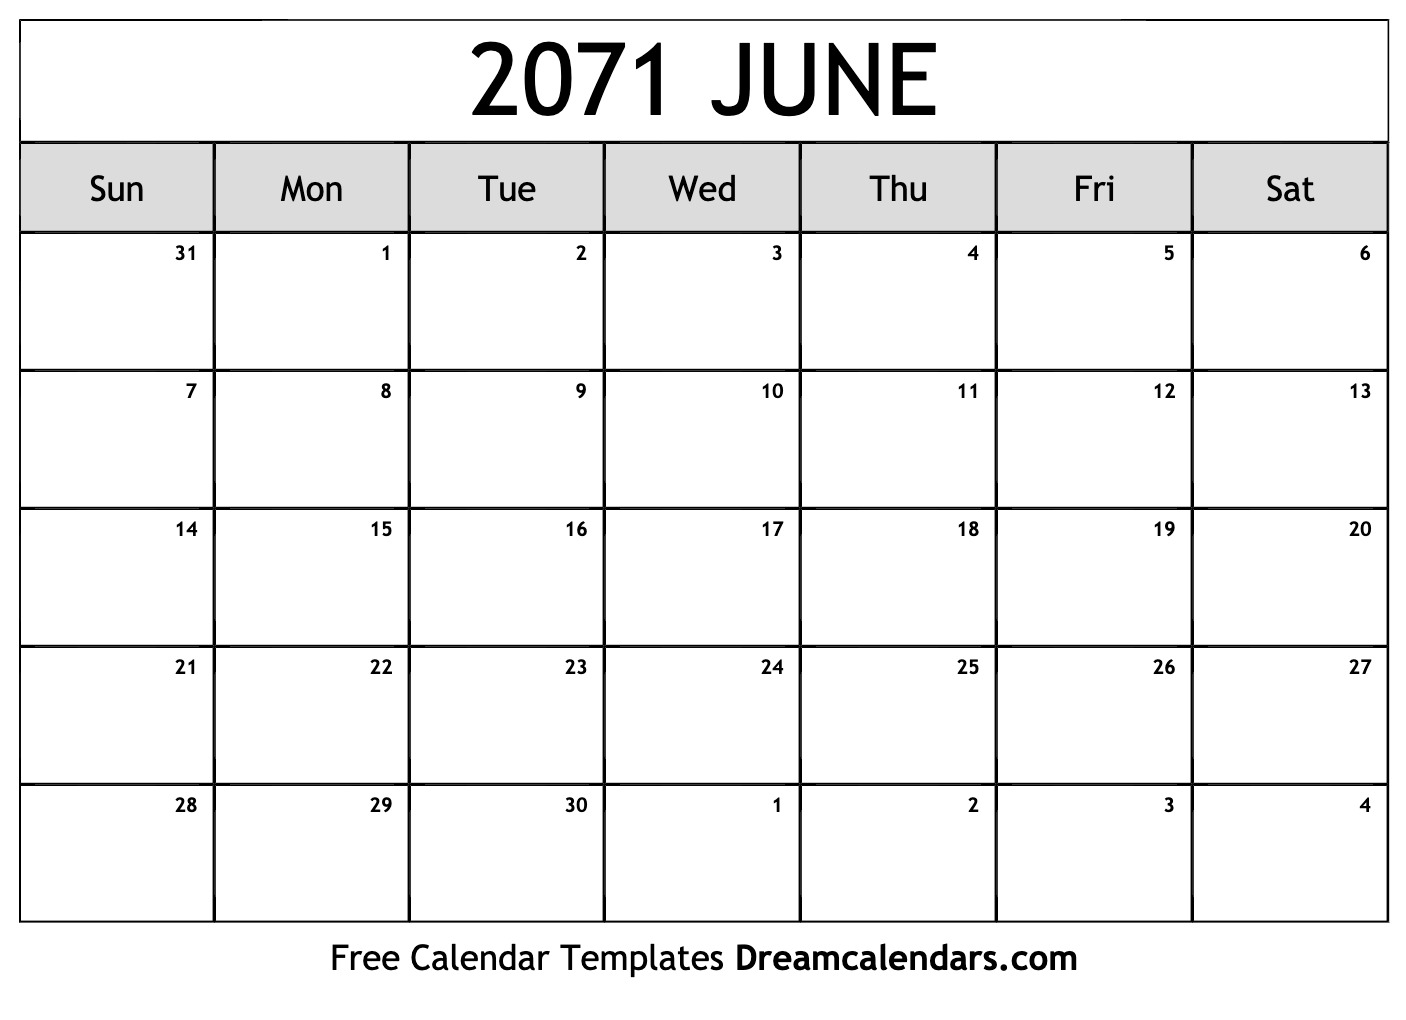 June 2071 Calendar Free Blank Printable With Holidays